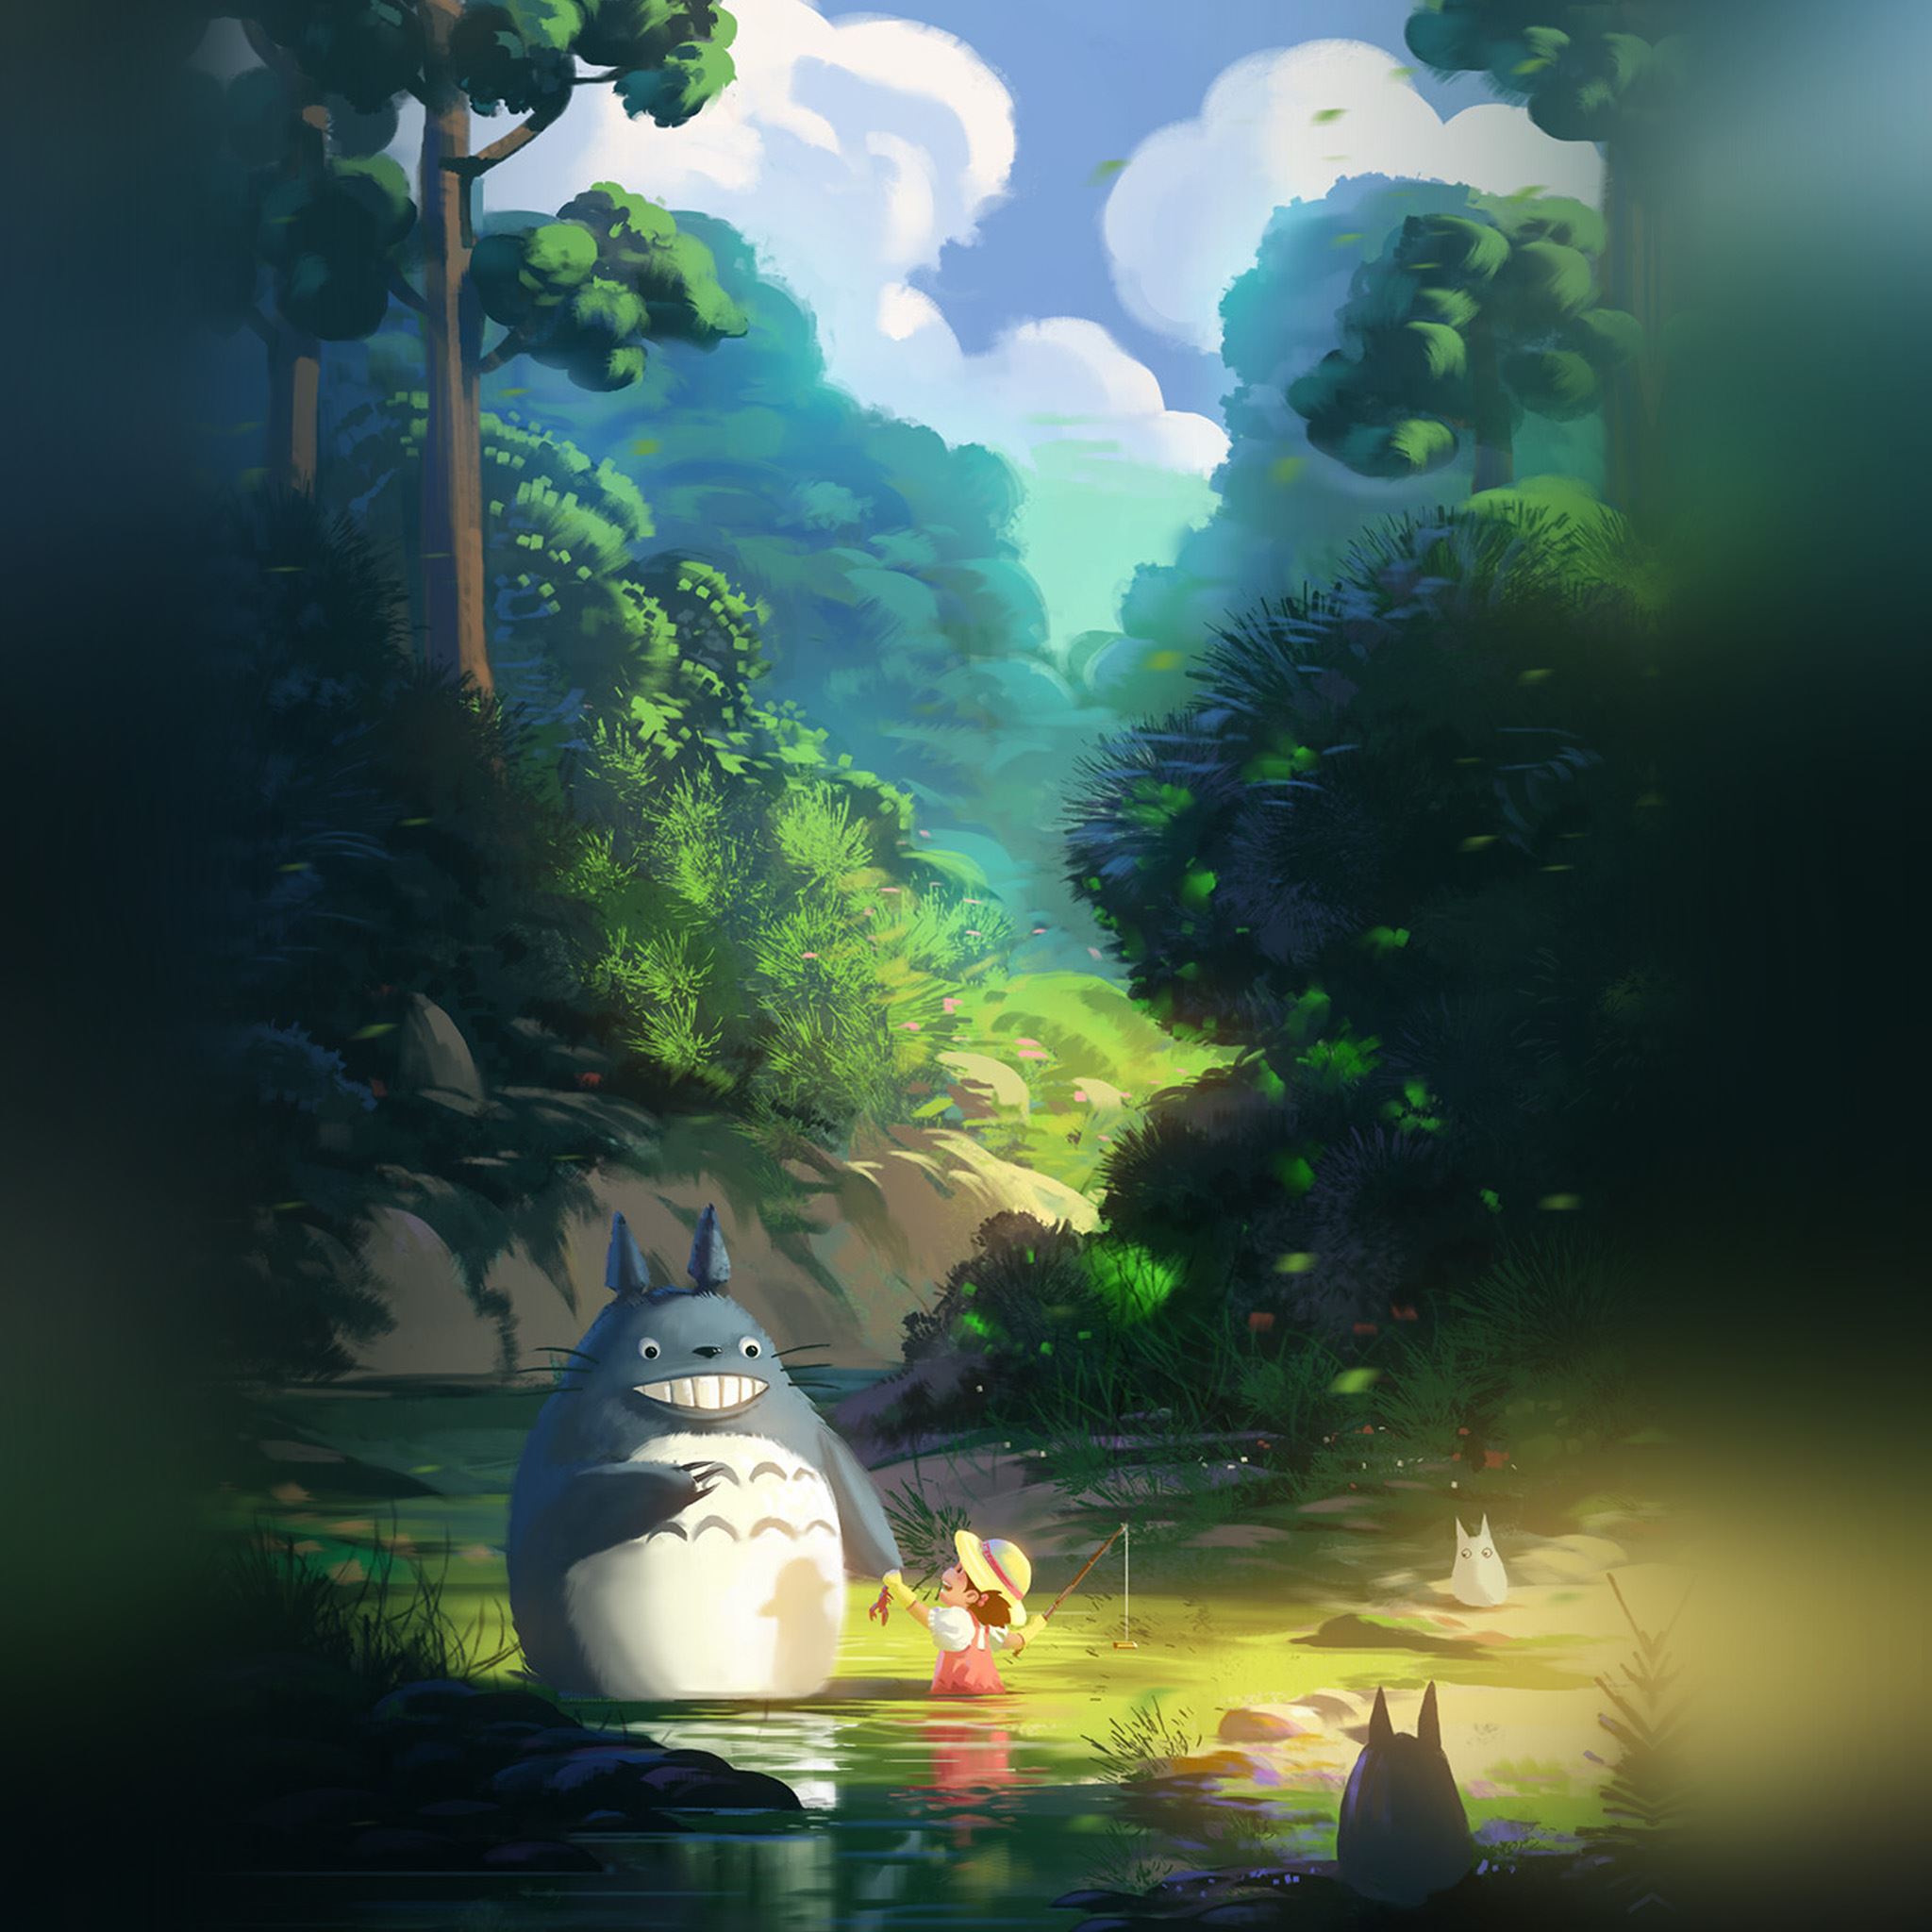 Totoro Anime Illustration Art iPad Air Wallpaper Free Download